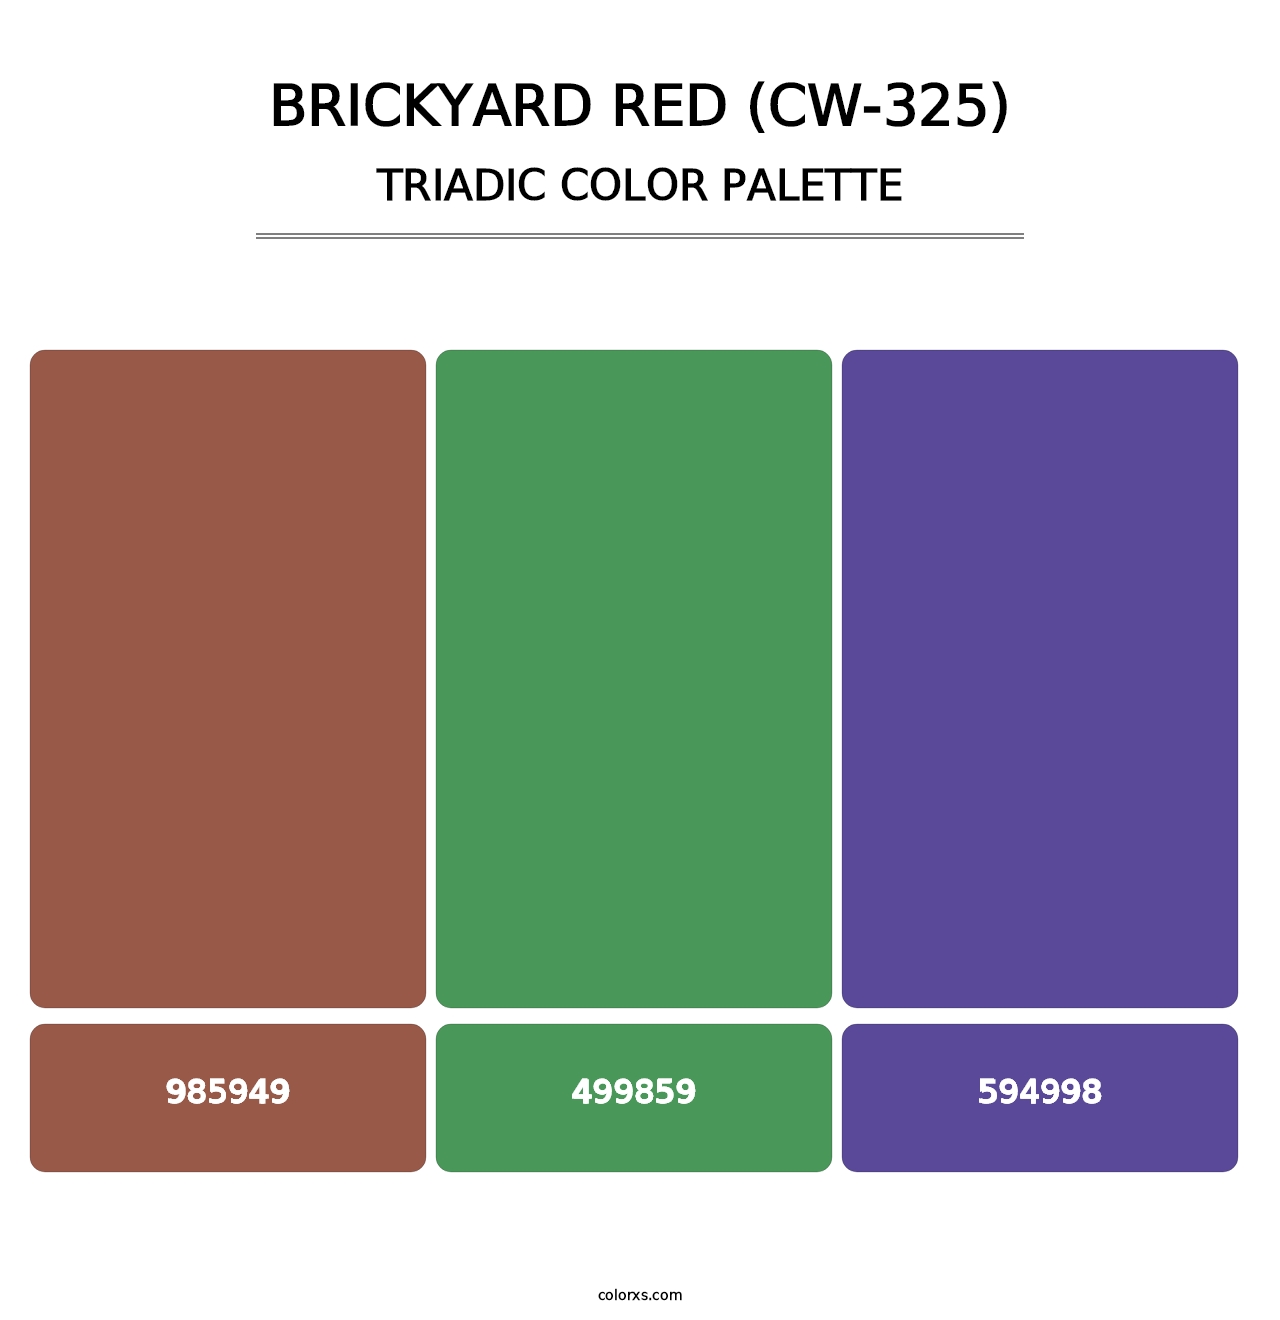 Brickyard Red (CW-325) - Triadic Color Palette